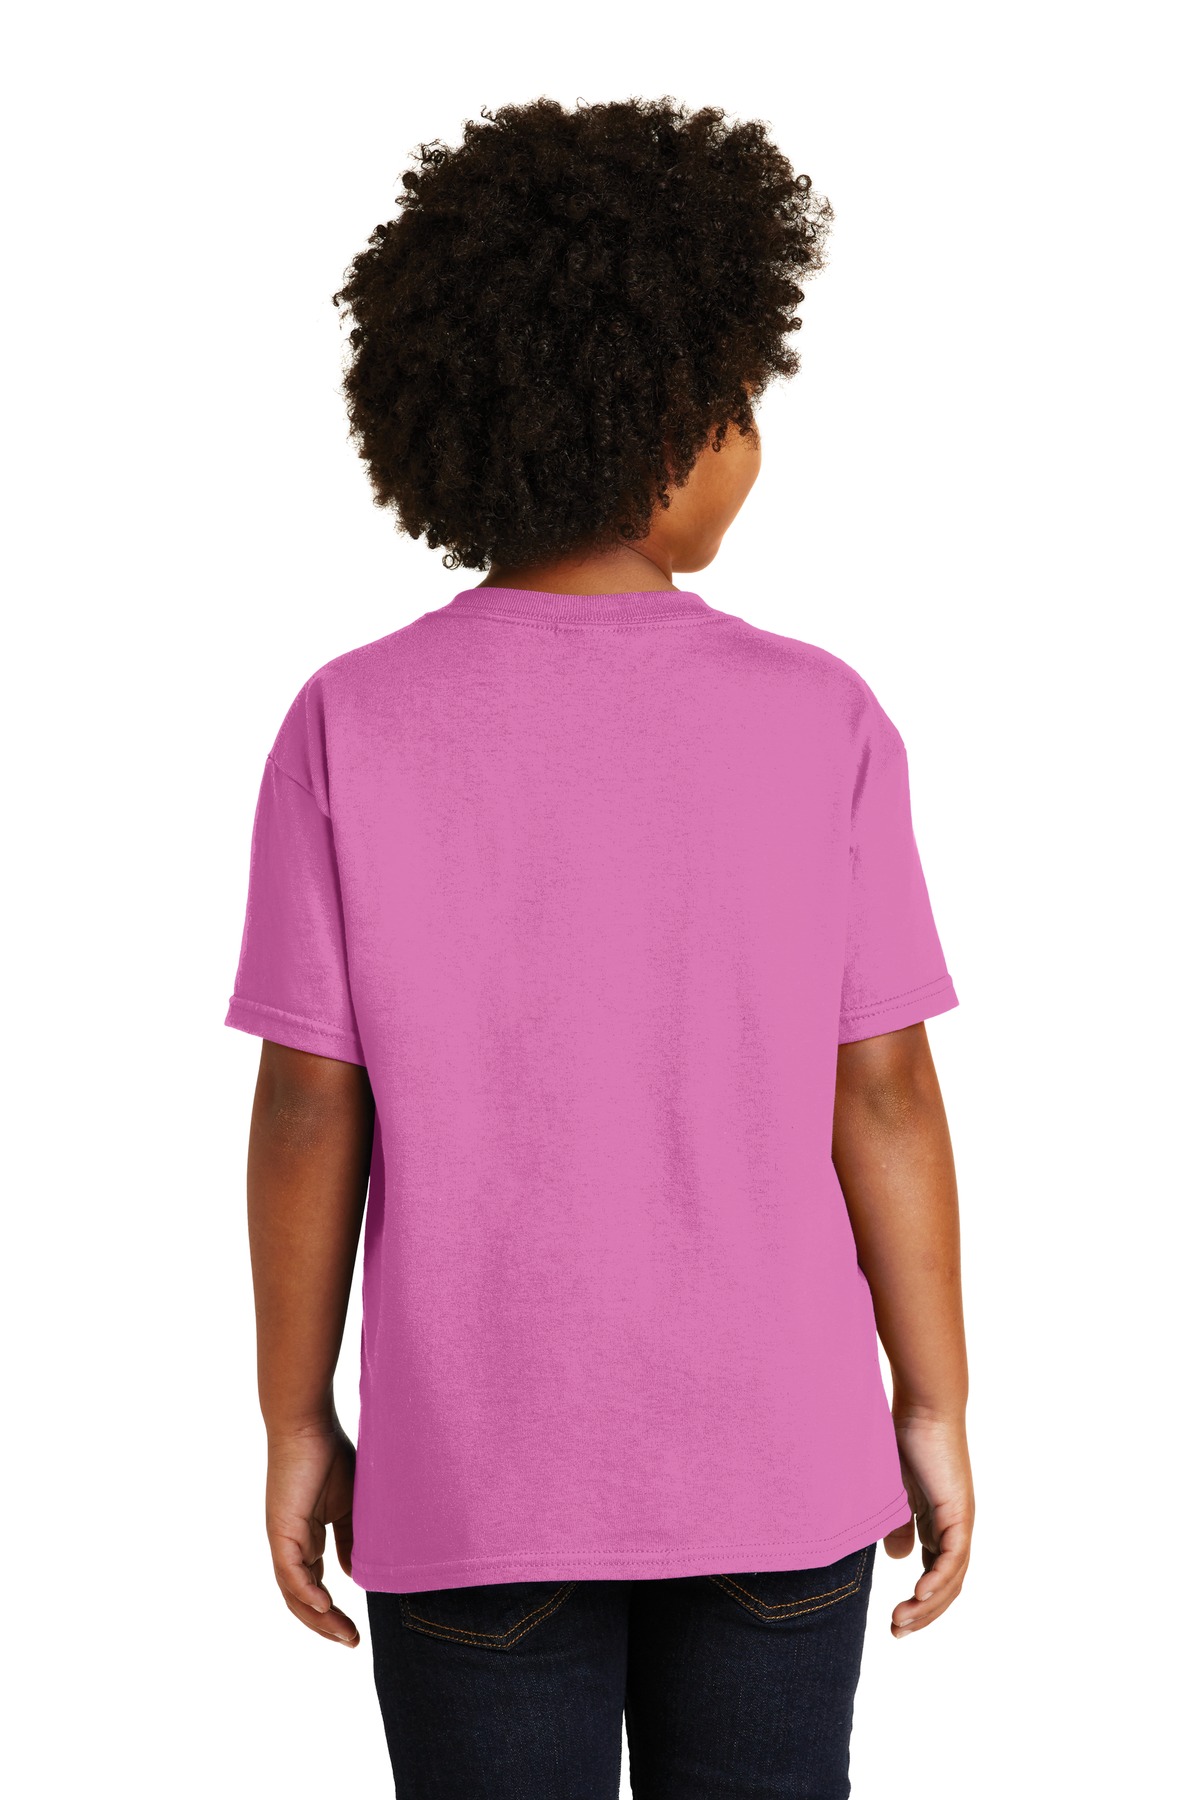 Artix - Big Girls T-Shirts and Tank Tops, up to Big Girls Size 24 - San Francisco - image 3 of 5